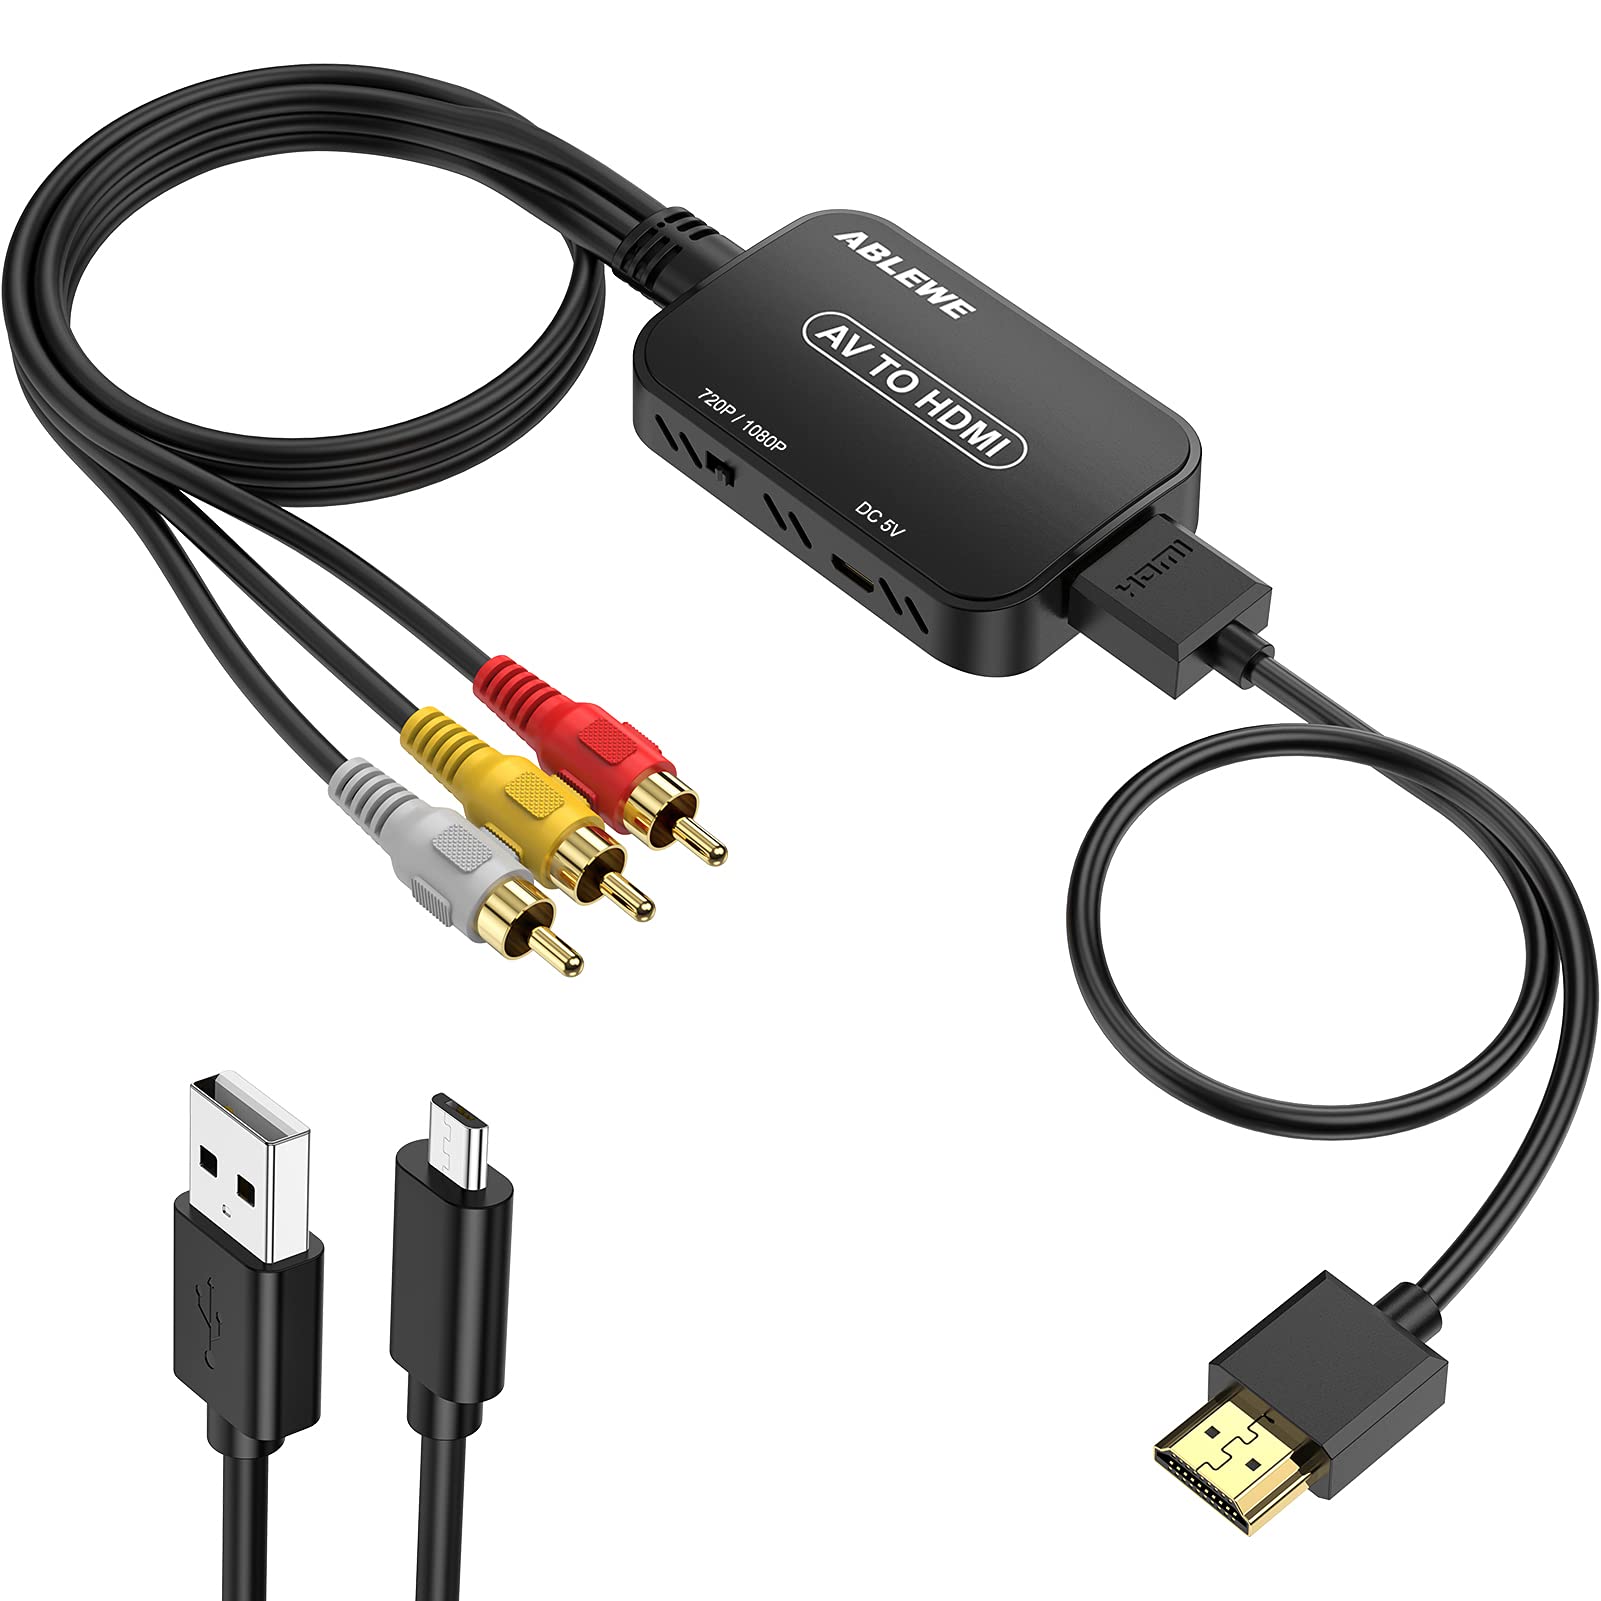 ABLEWE RCA to HDMI 変換コンバーター AV to HDMI コンポジット 1080/720P切り替え 音声出力可 USB給電 日本語取扱説明書付き3色(赤 白